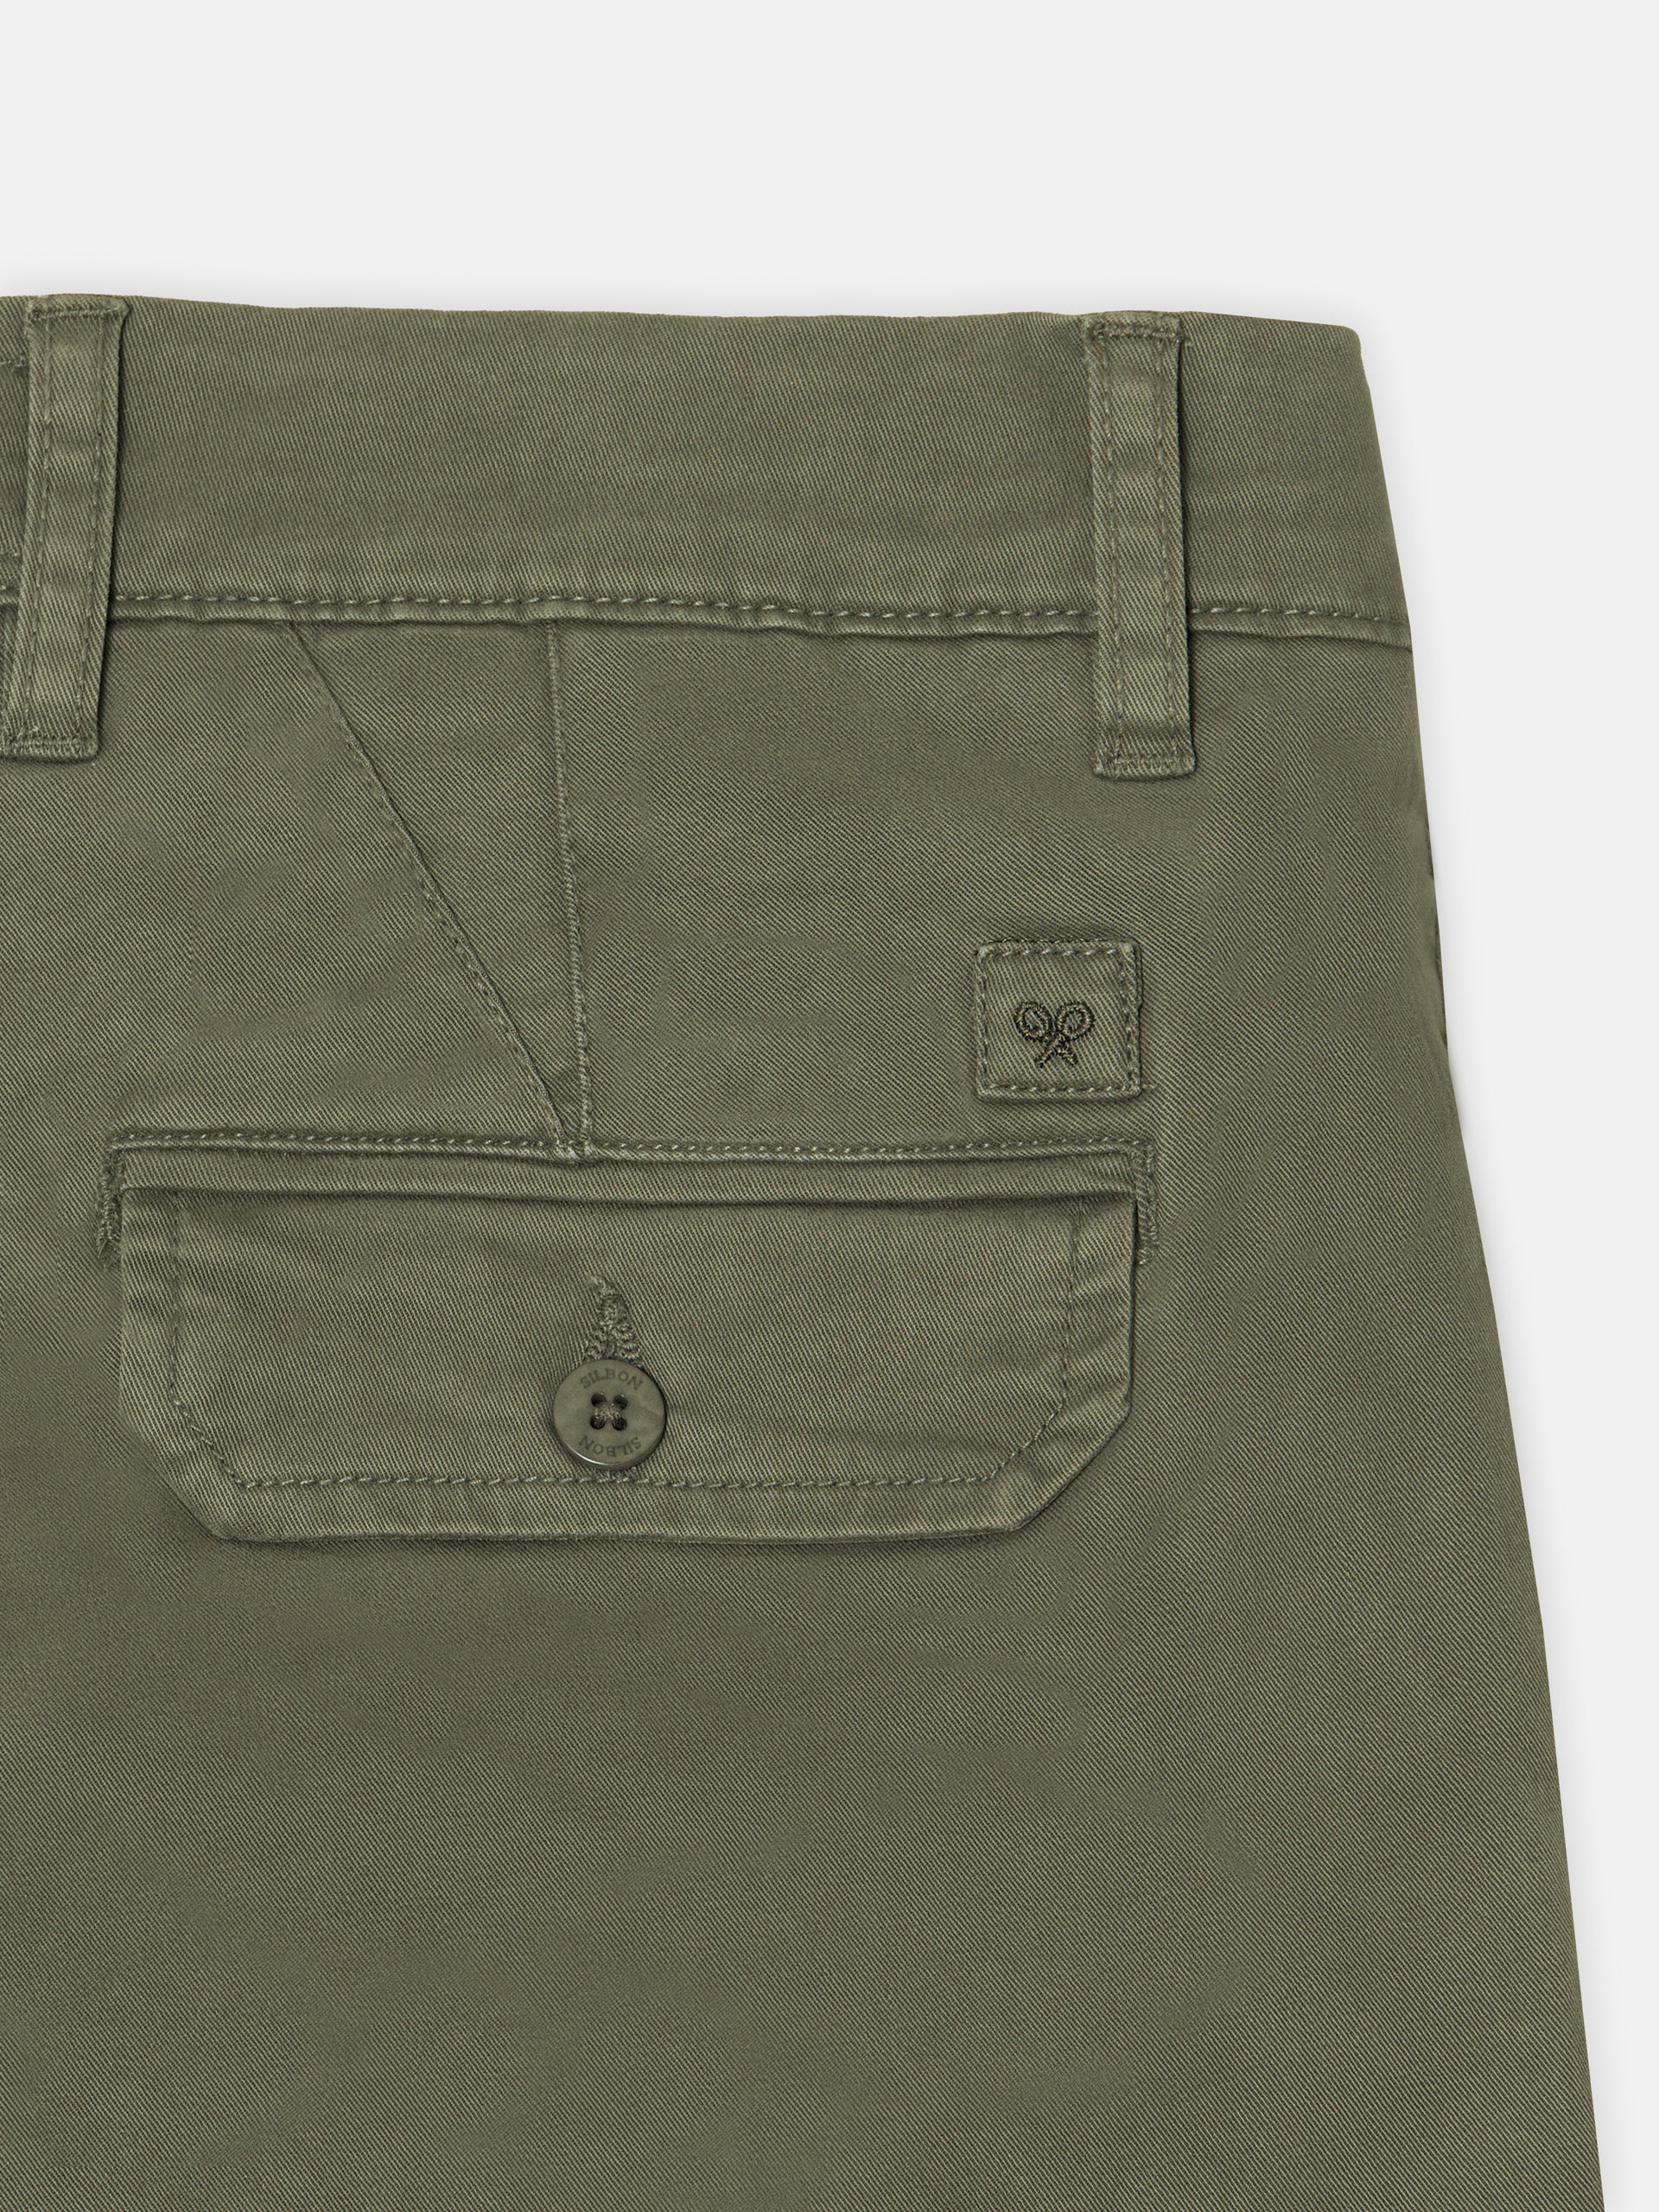 Green cargo sport pants